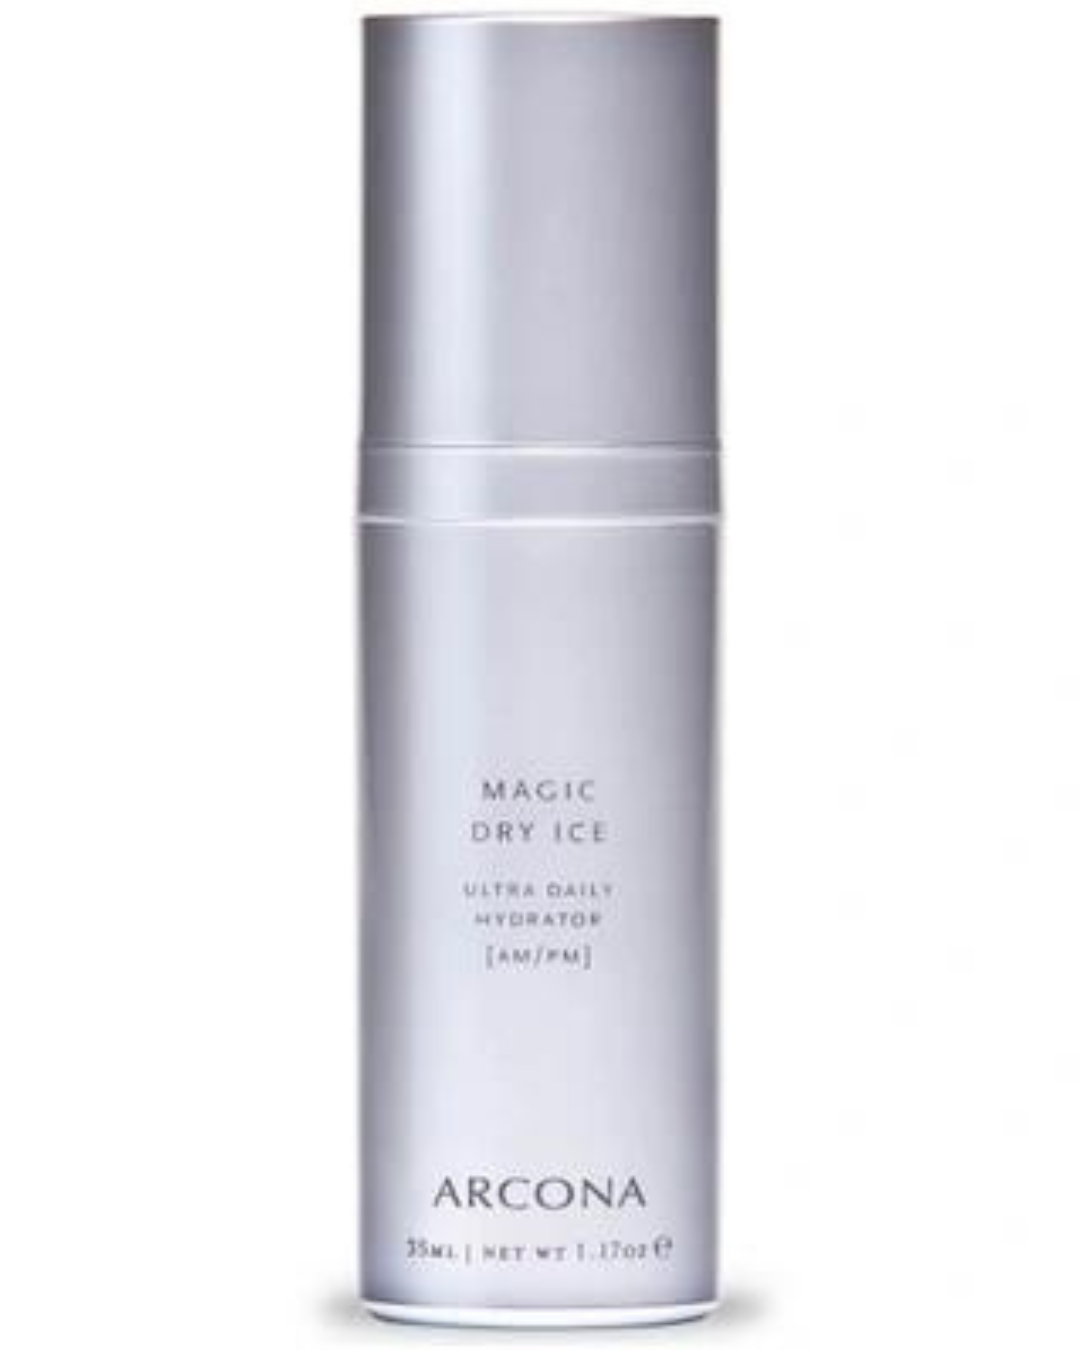 Arcona - Magic Dry Ice - Ultra Daily Hydrator [AM / PM] - $73.00